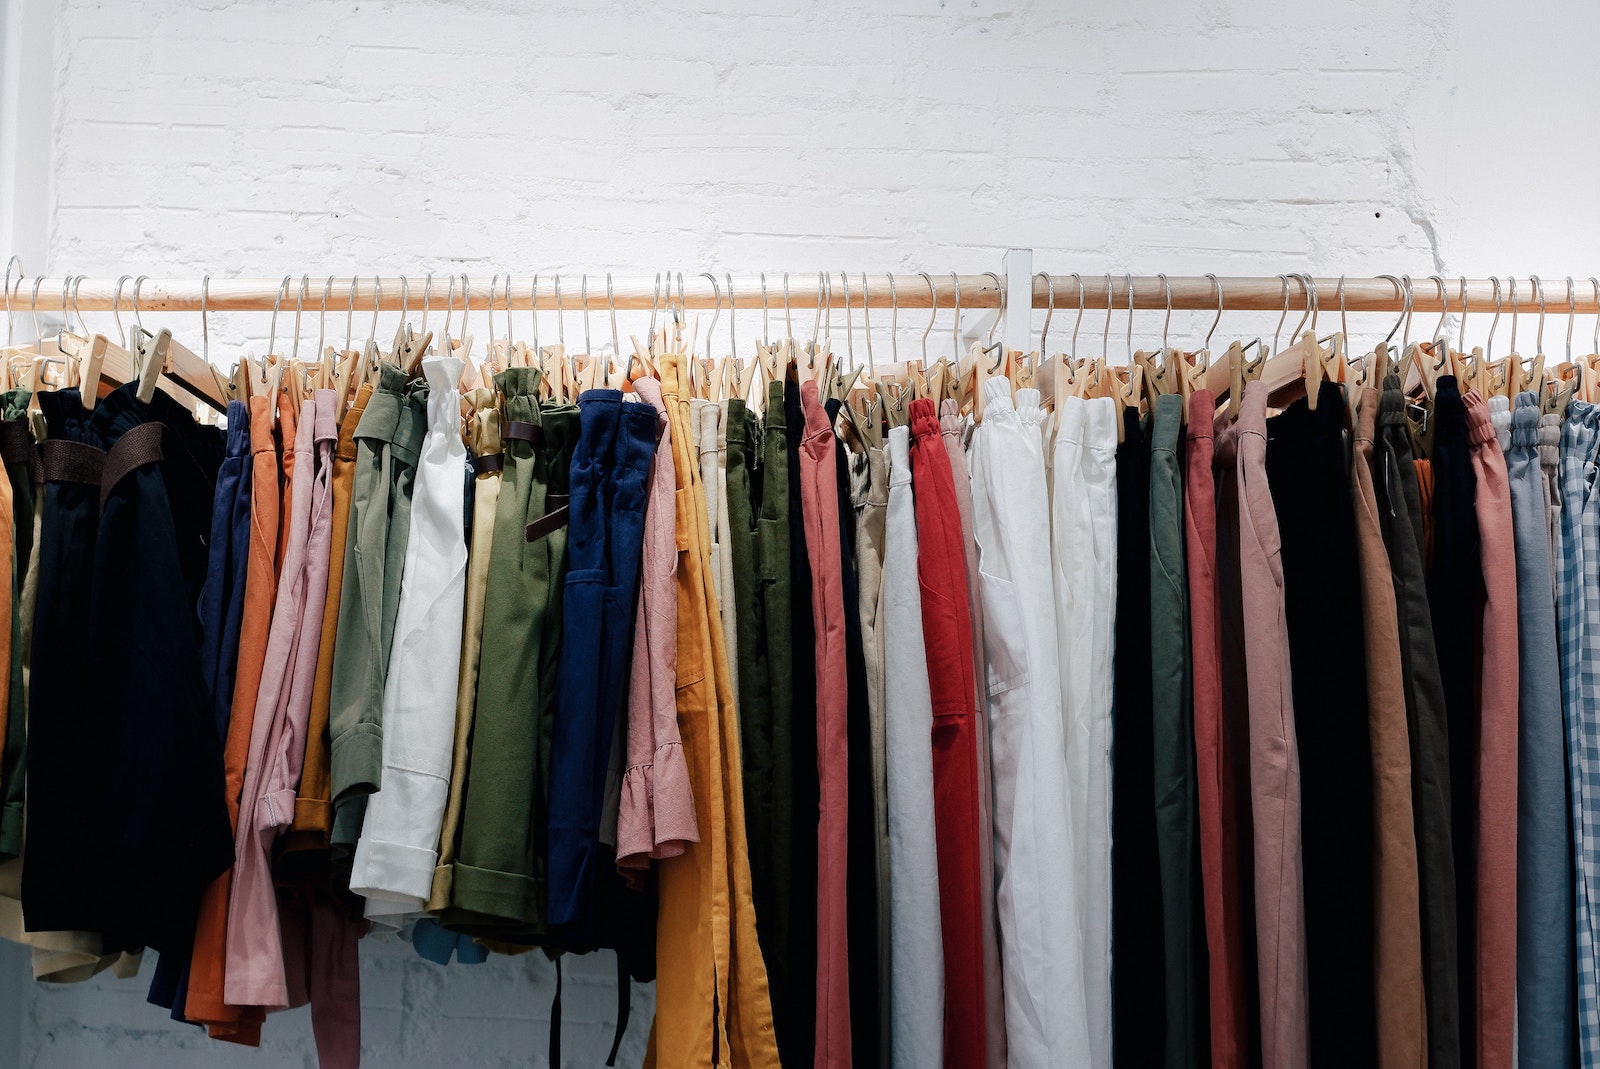 Clothes Hangers - Cheap Retail & Garment Hangers